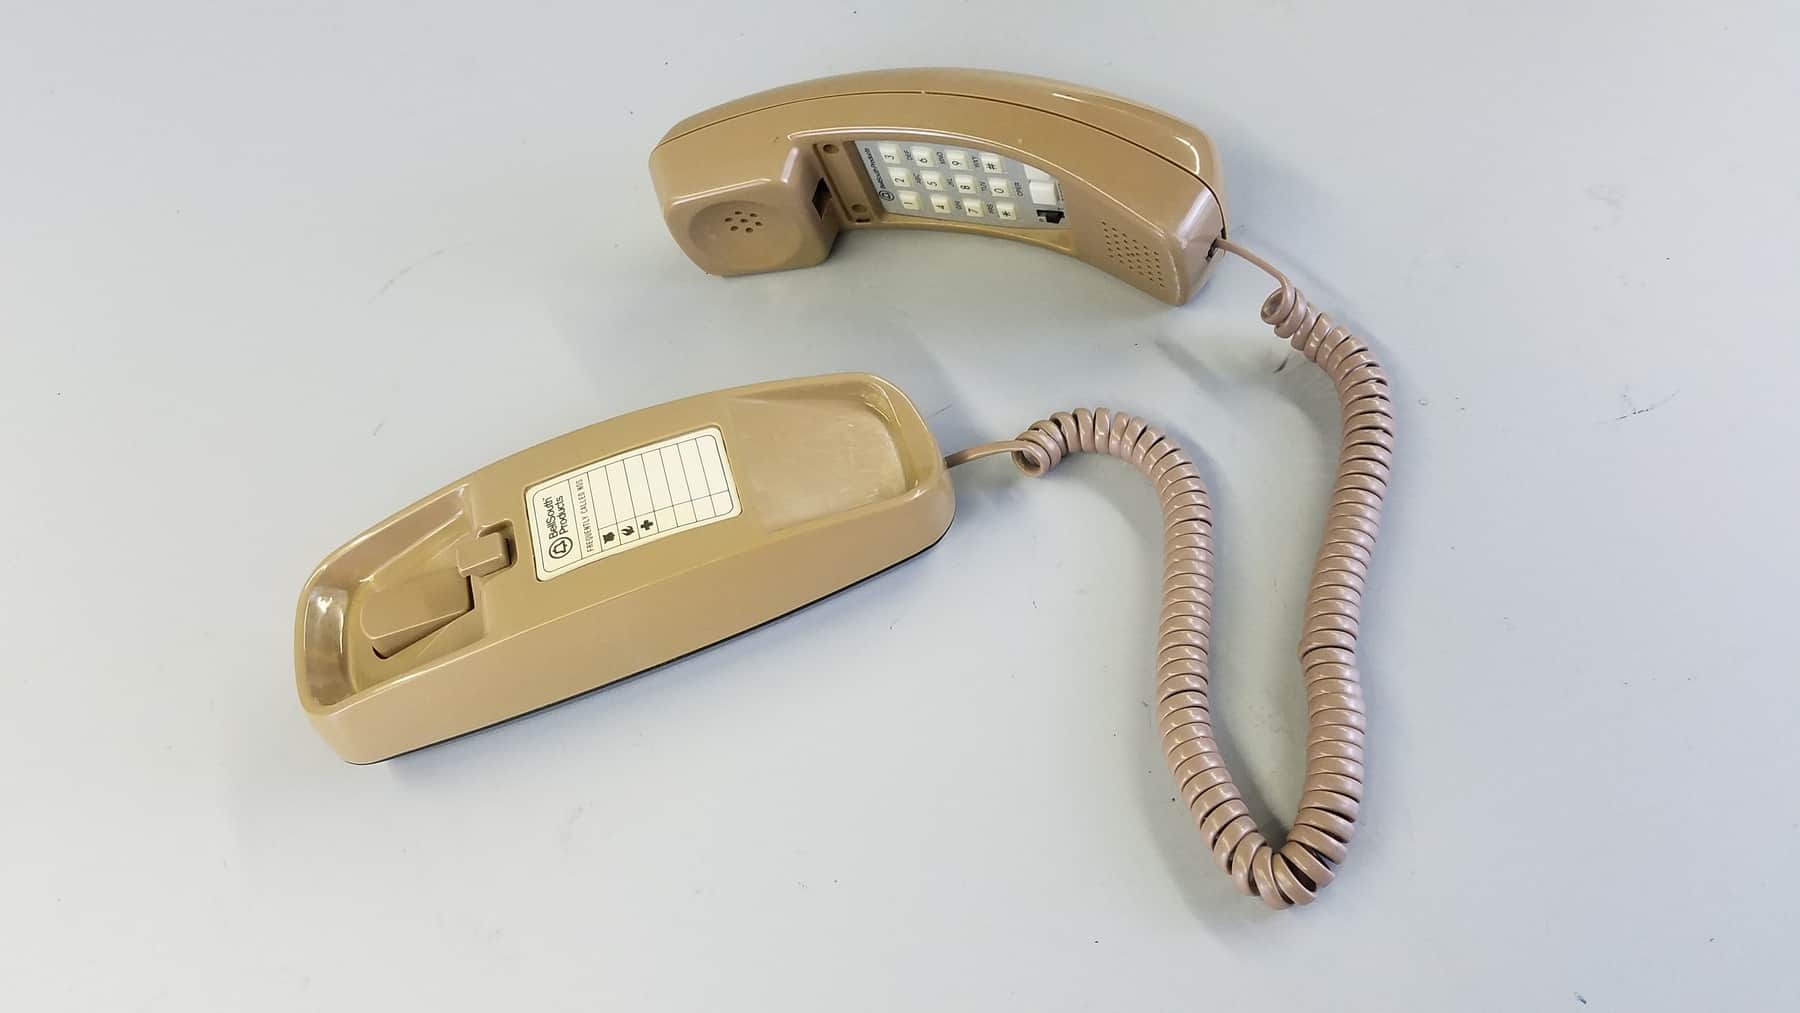 1980 S Slimline Touch Tone Telephone